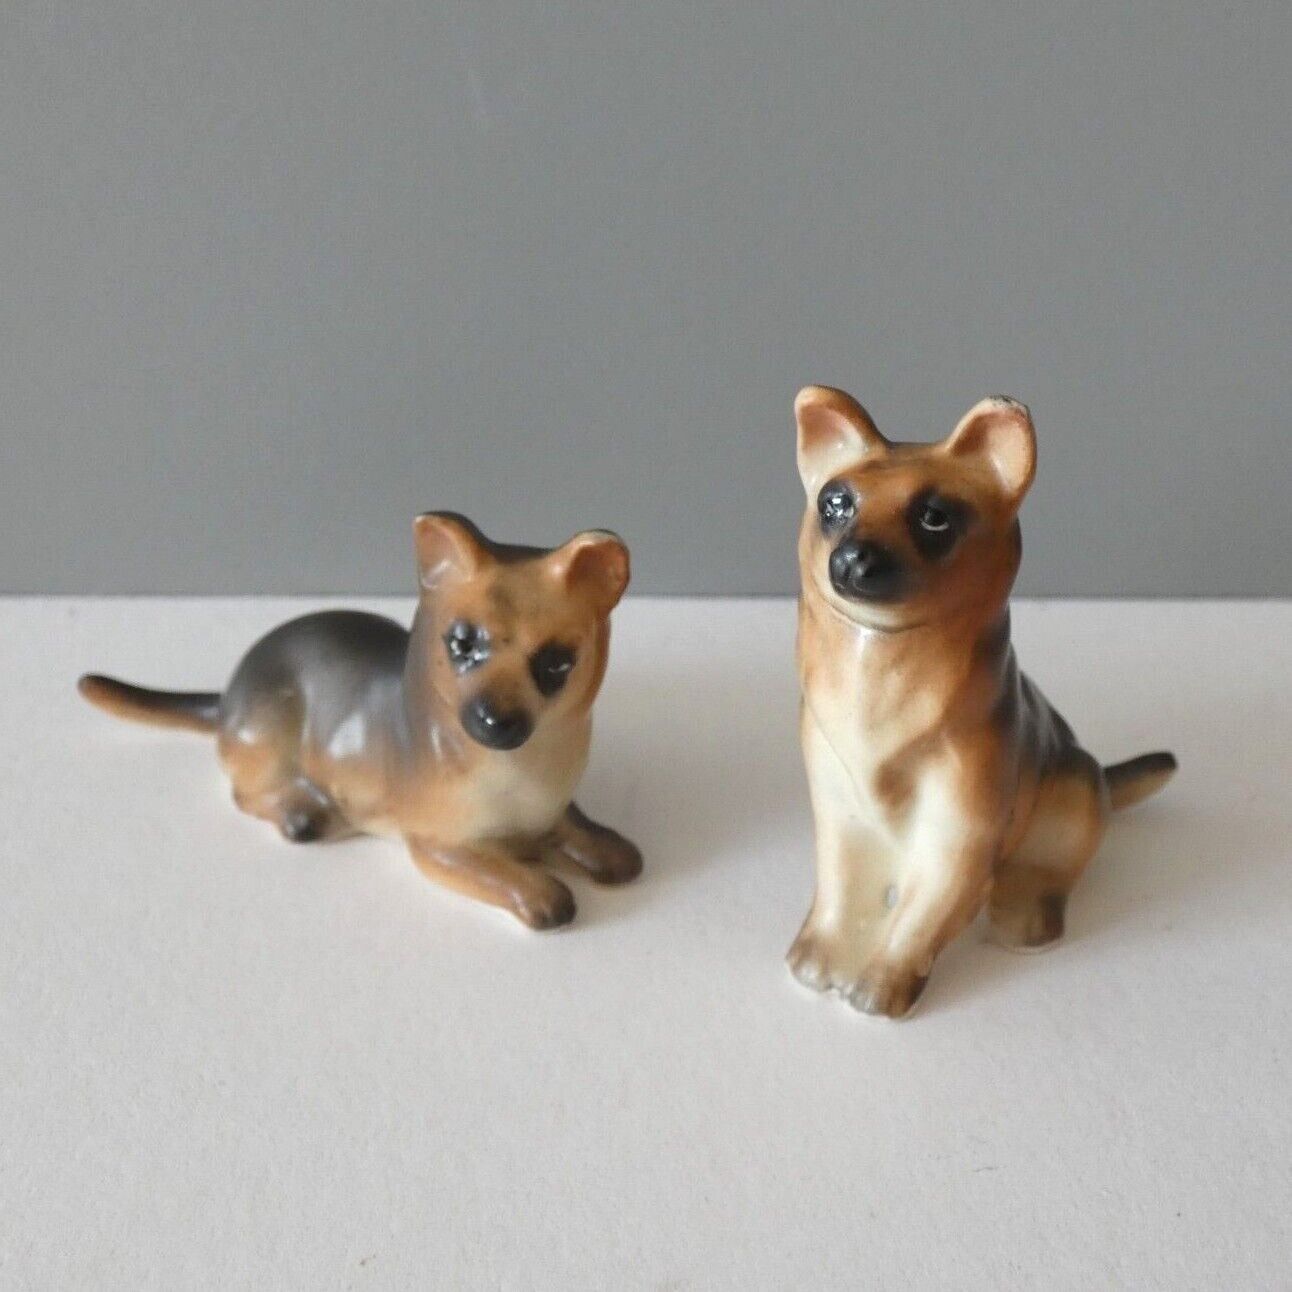 2 Small Miniature Vintage Ceramic Alsatian Dog Ornaments Cute Kitsch Retro Japan